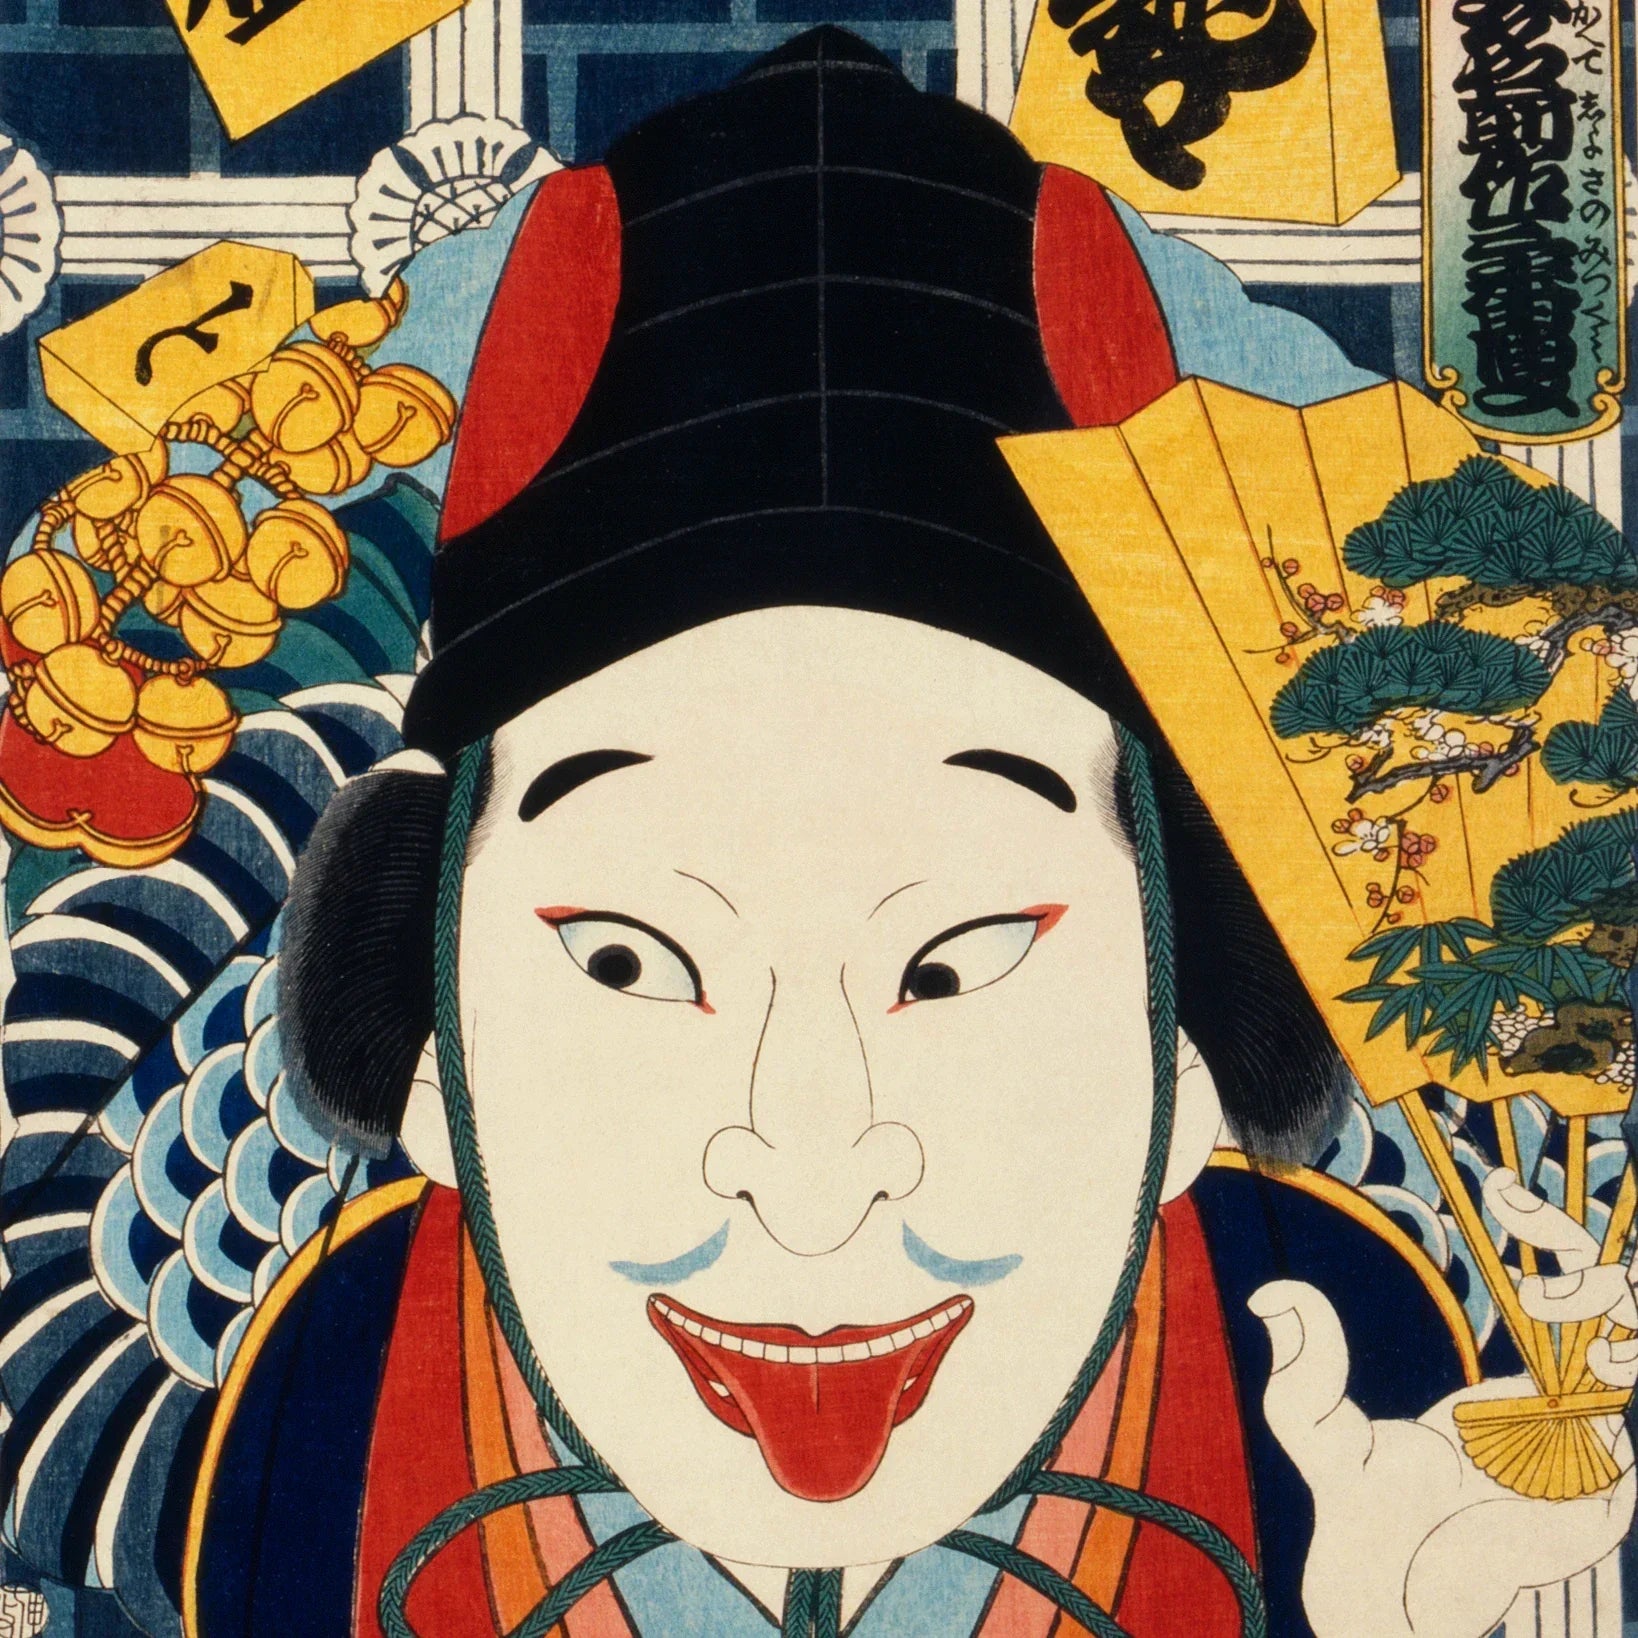 Toyohara Kunichika: Iconic Master of Japanese Art